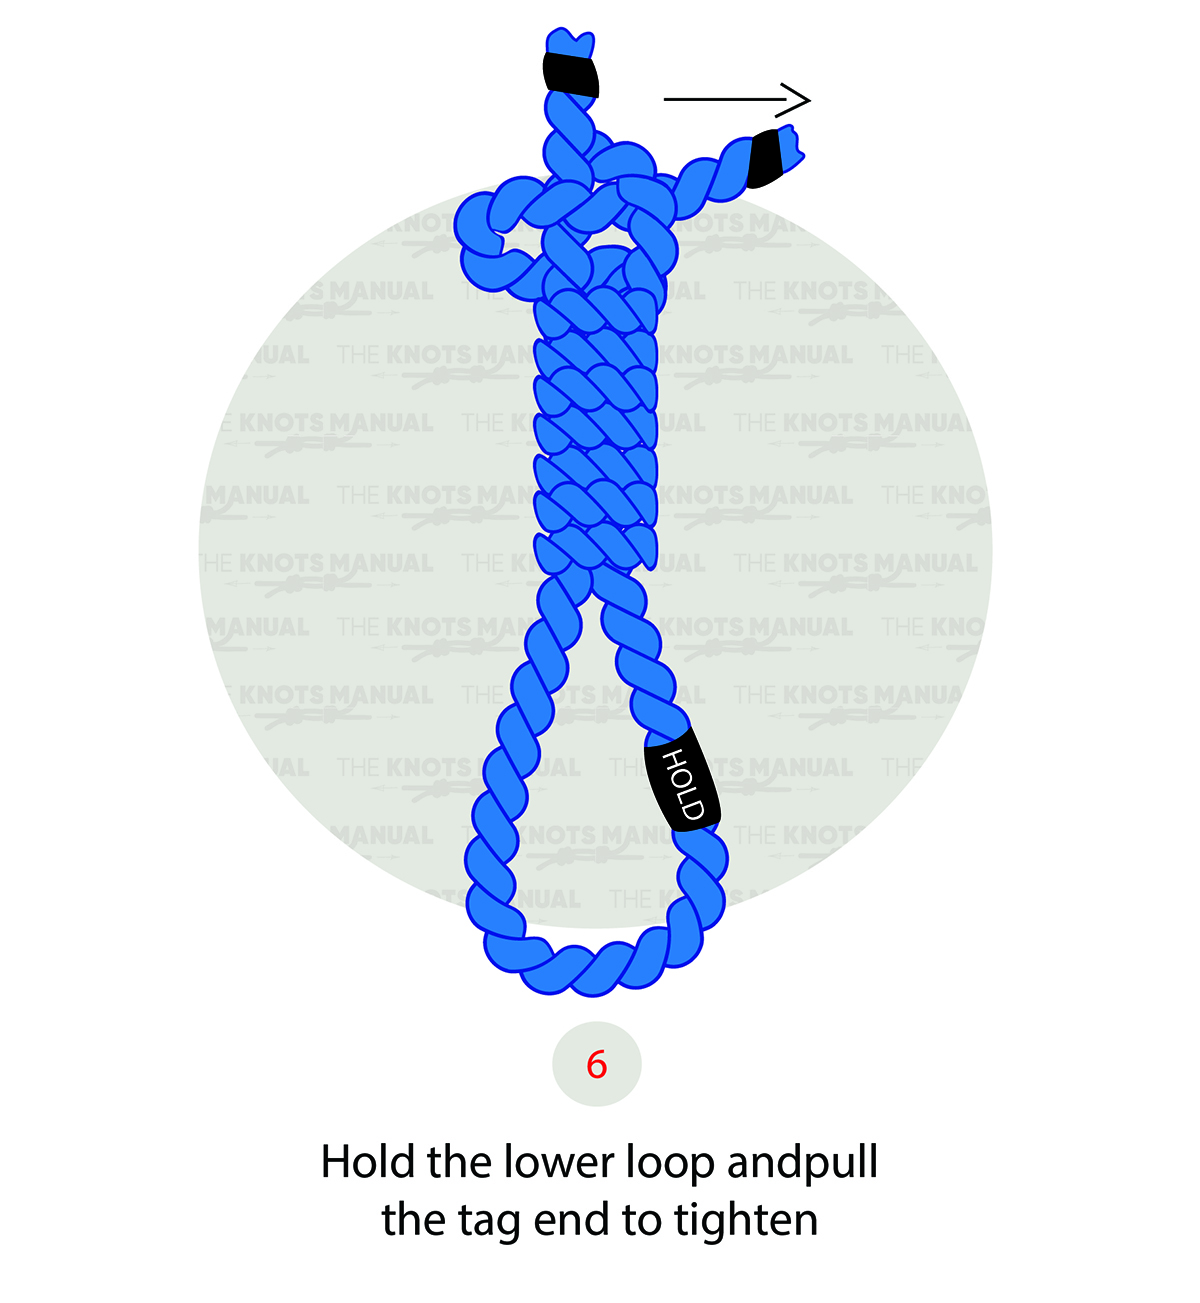 Hangman’s Knot (Noose) Step 6